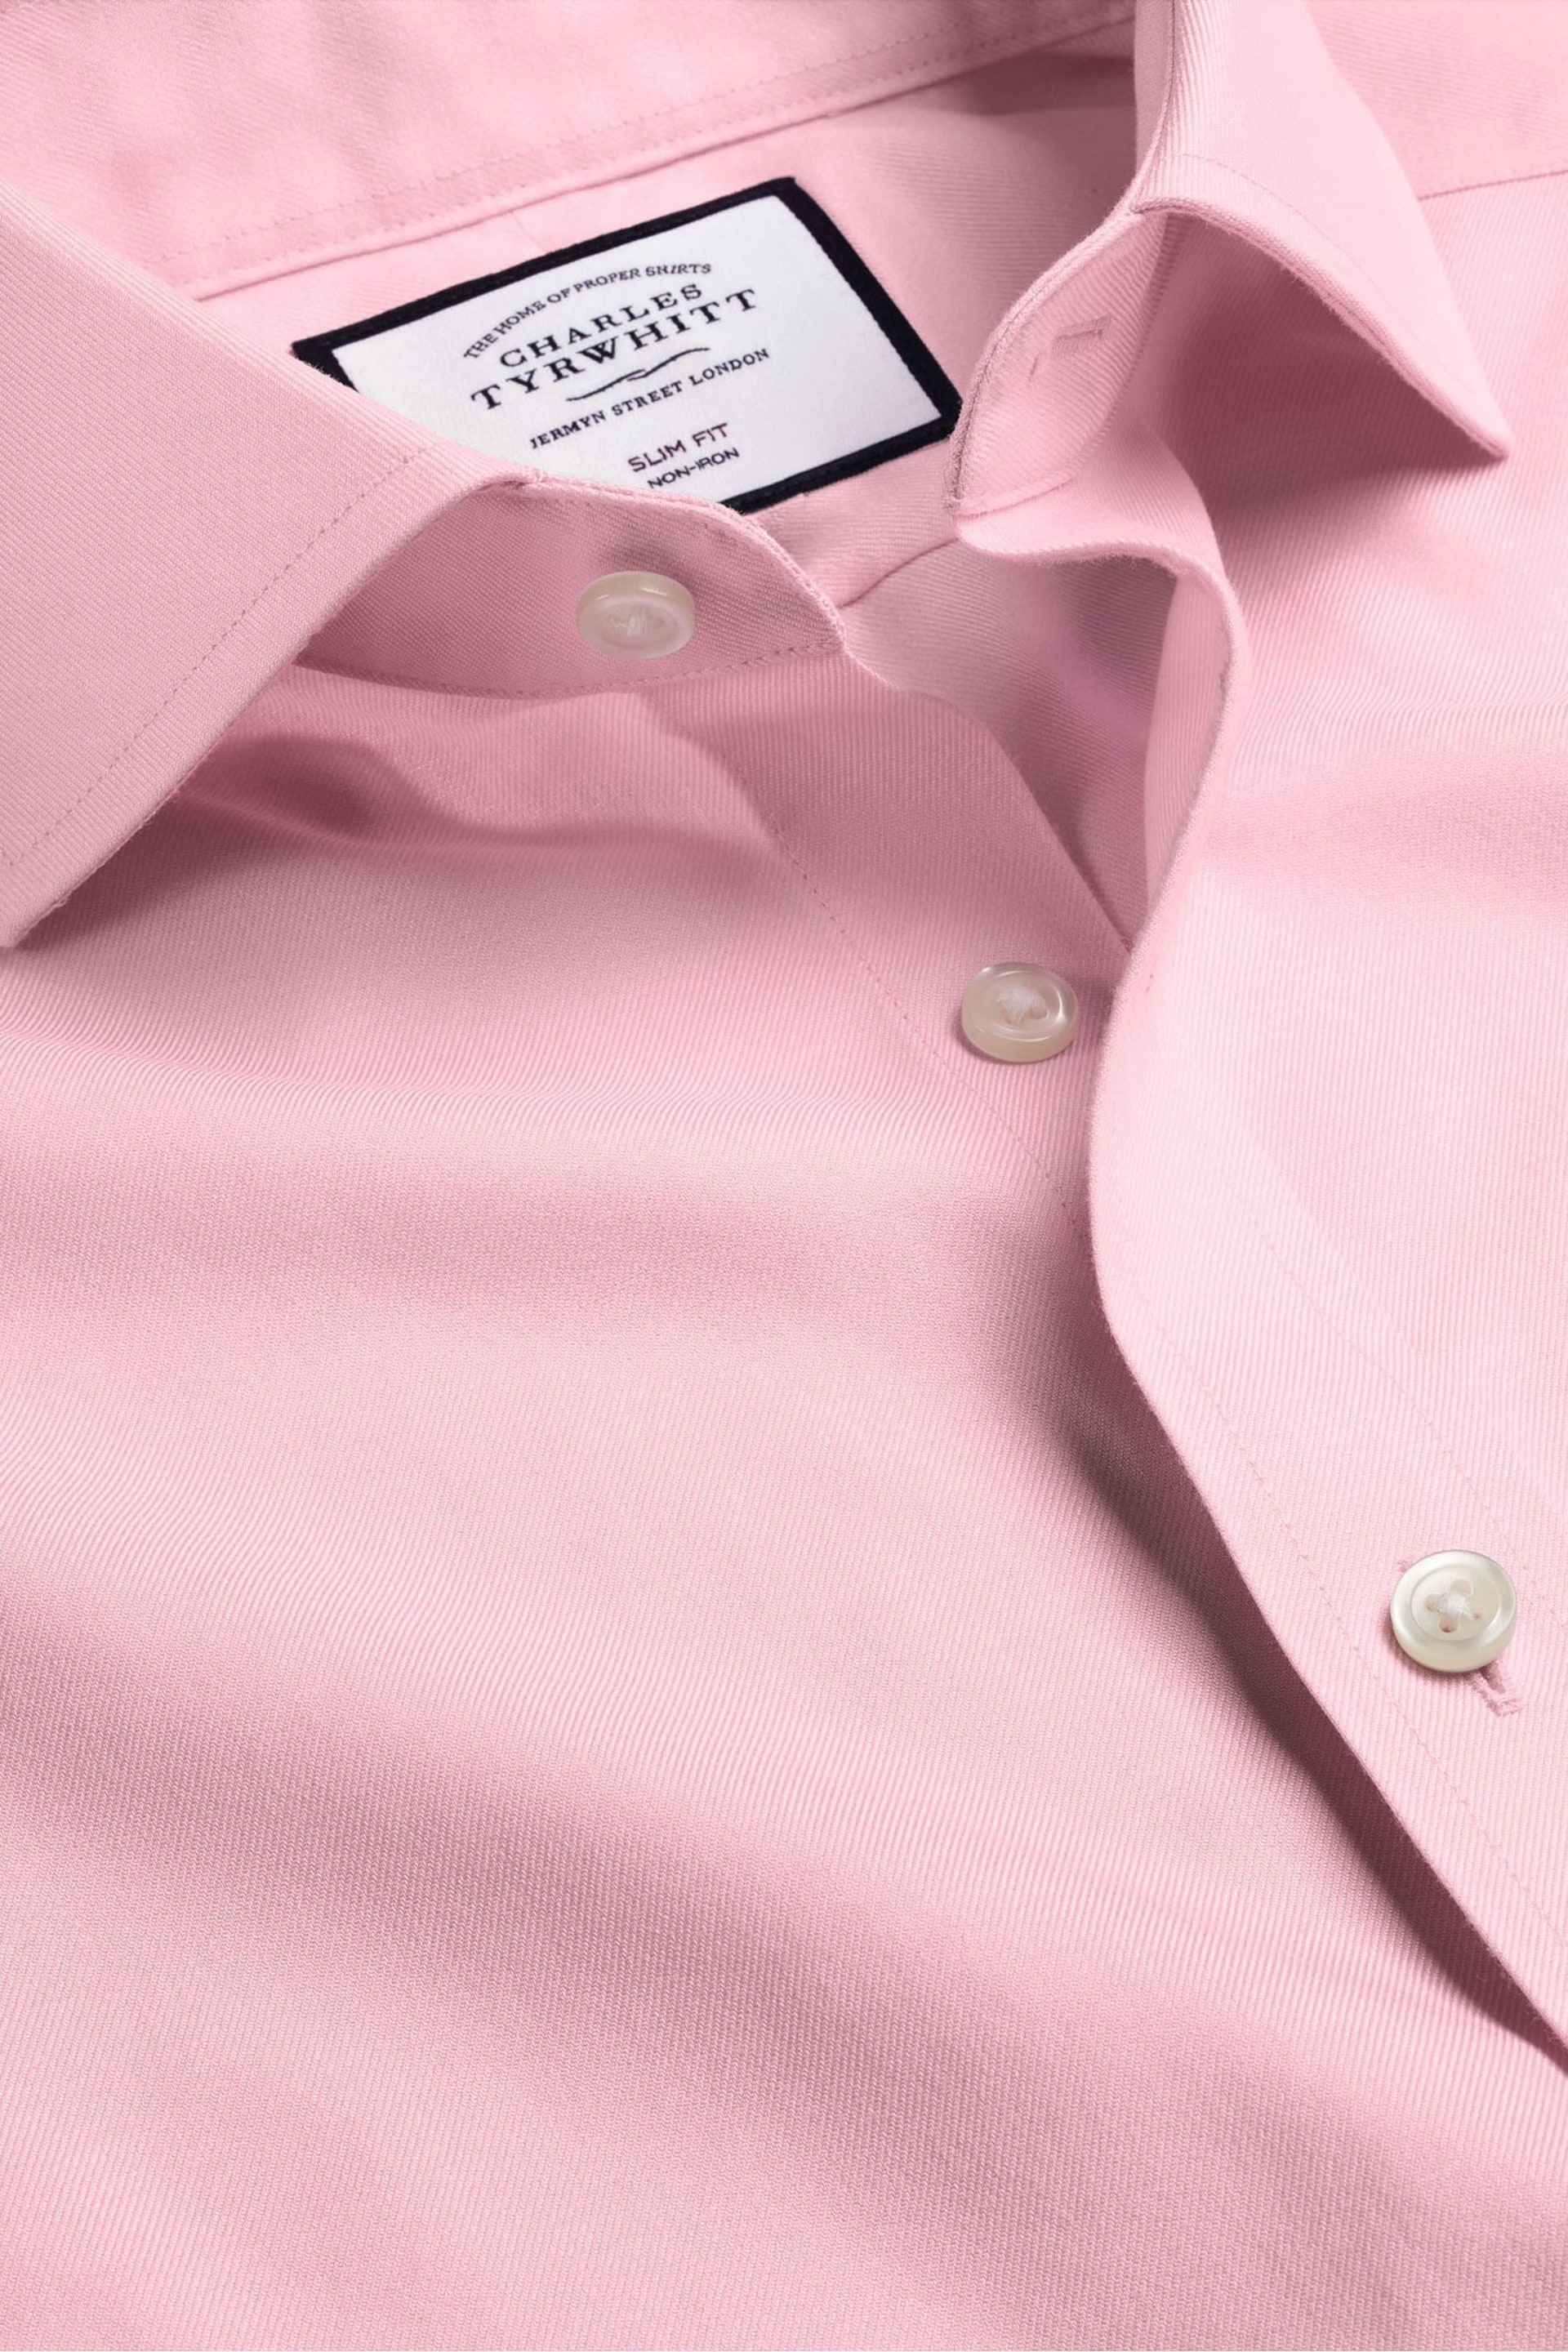 Charles Tyrwhitt Pink Non Iron Twill Cutaway Slim Fit Shirt - Image 1 of 5